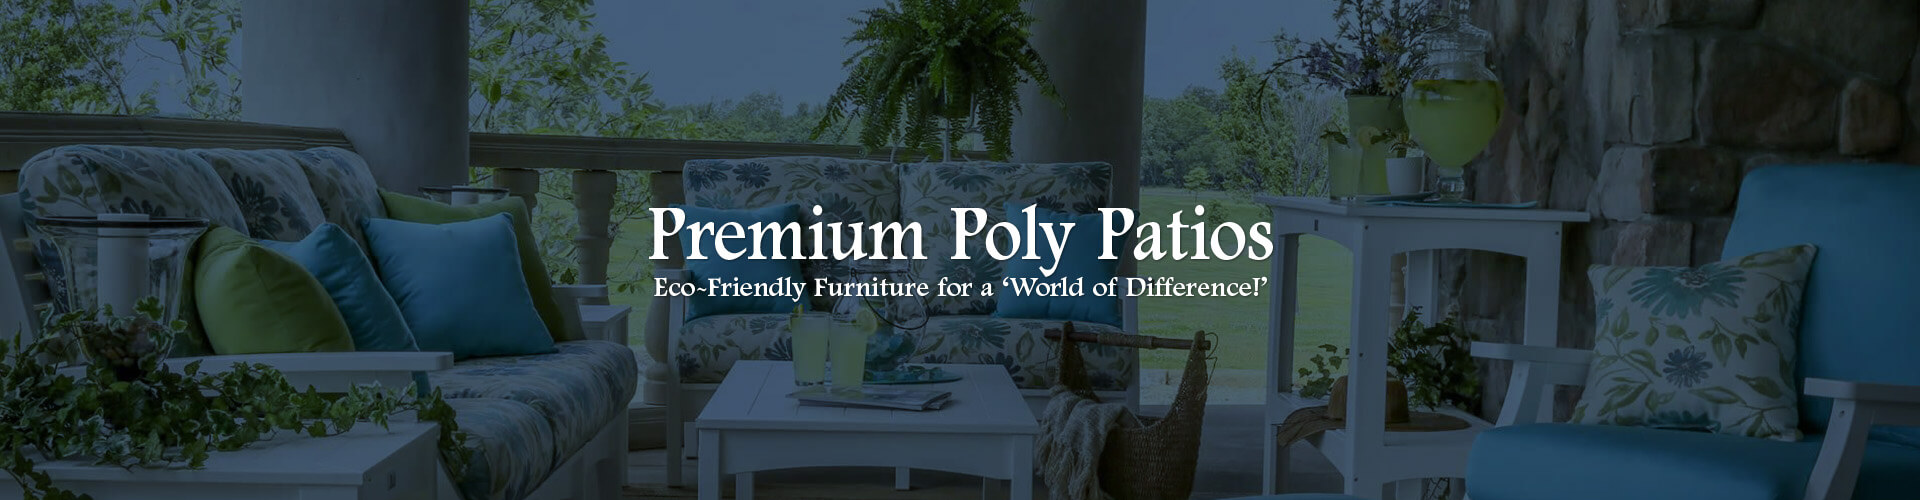 Premium Poly Patios banner